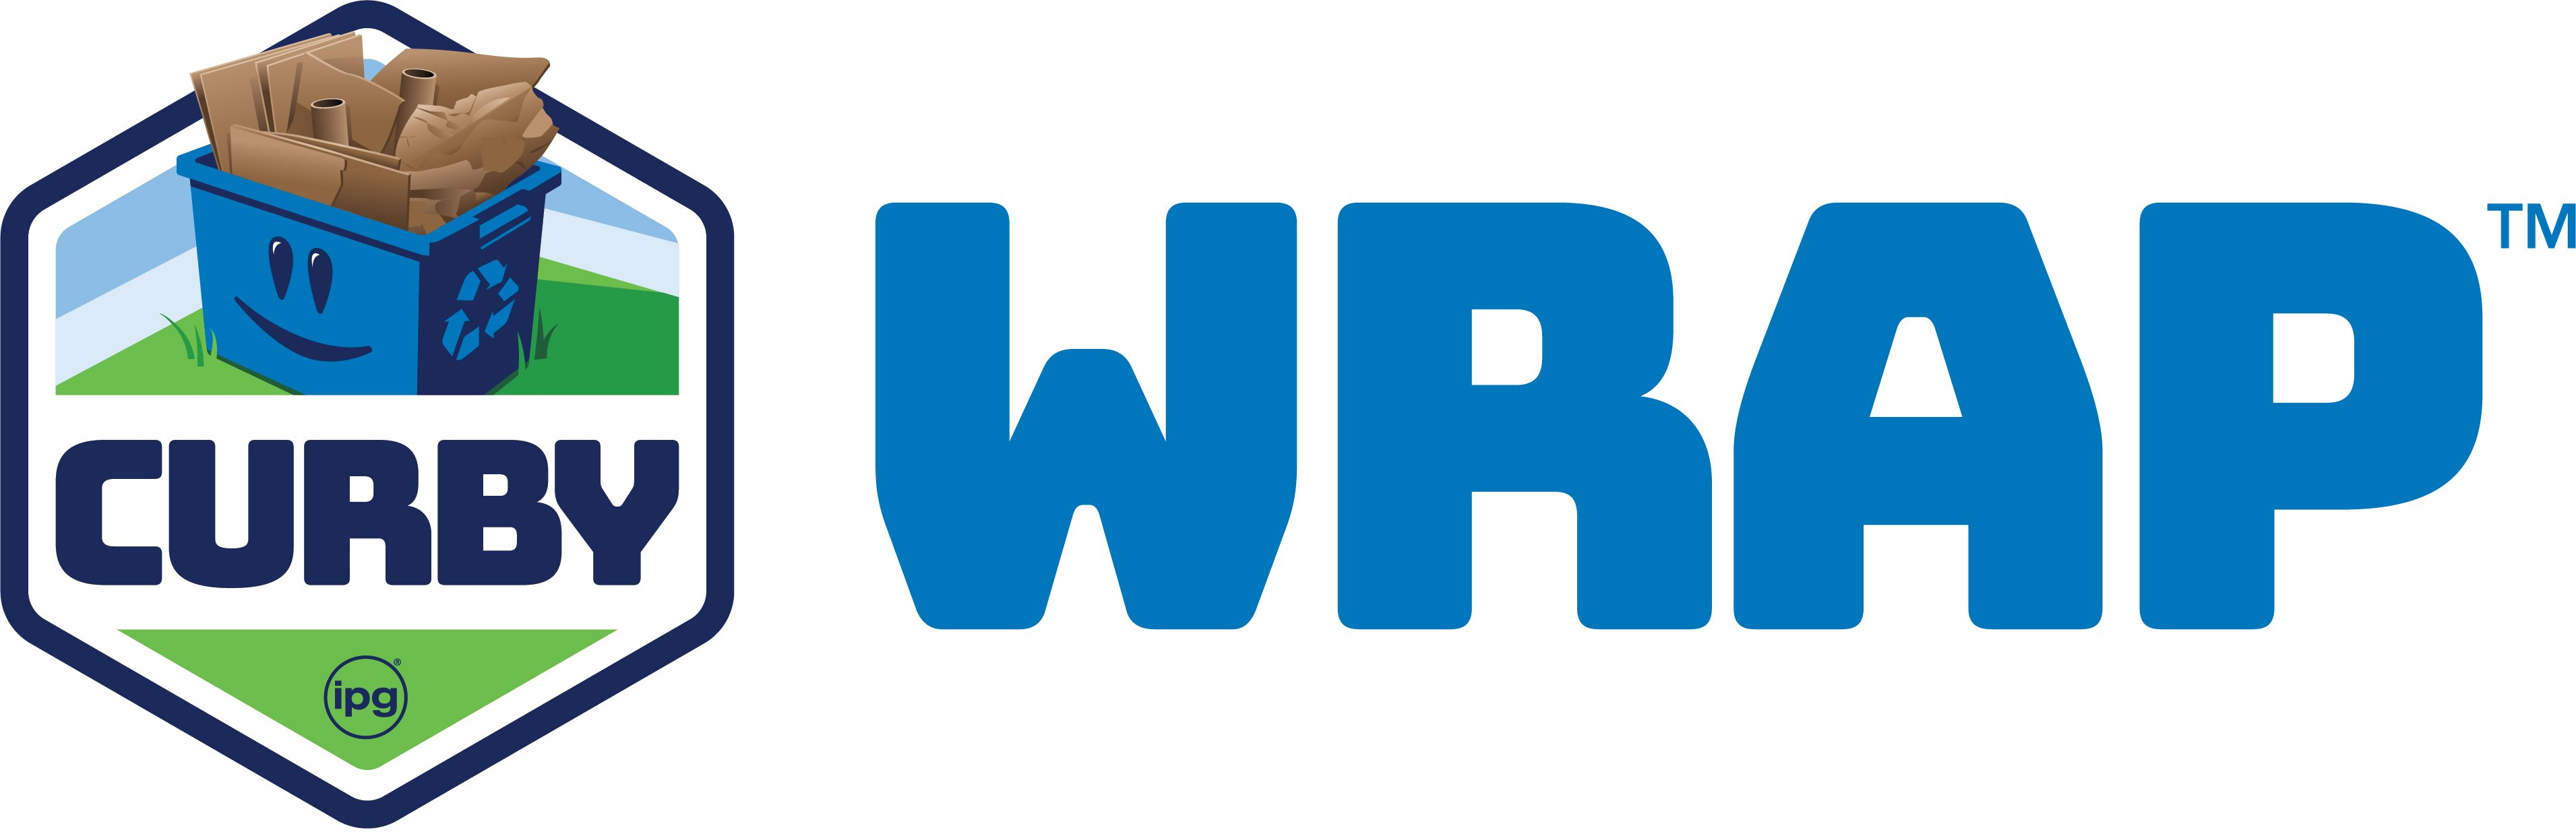 Trademark Logo CURBY WRAP